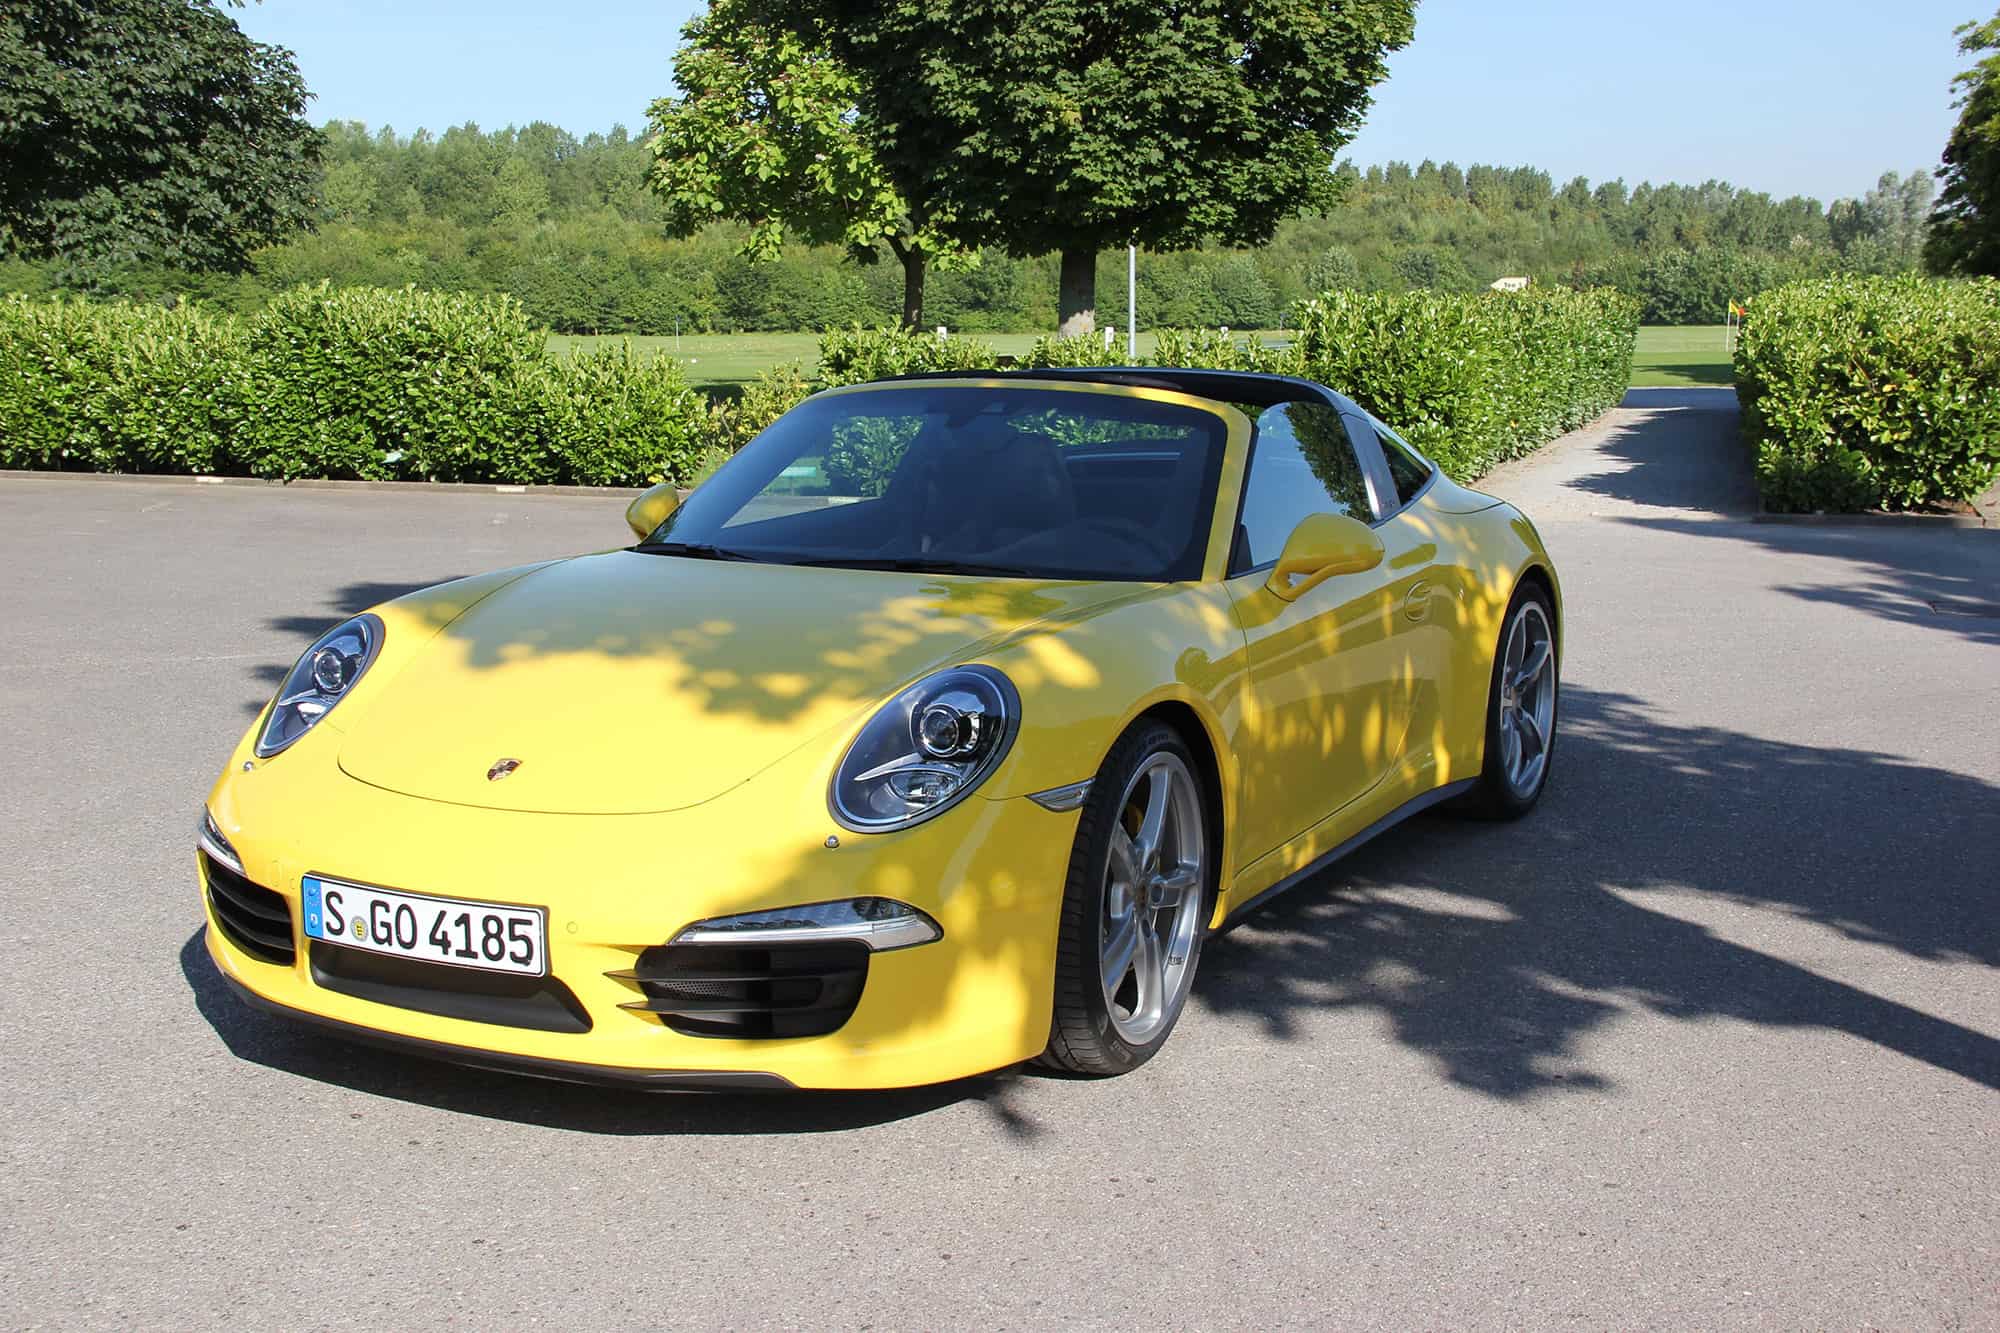 Porsche 911 Sports Classic Introduces Retro Models to the Present